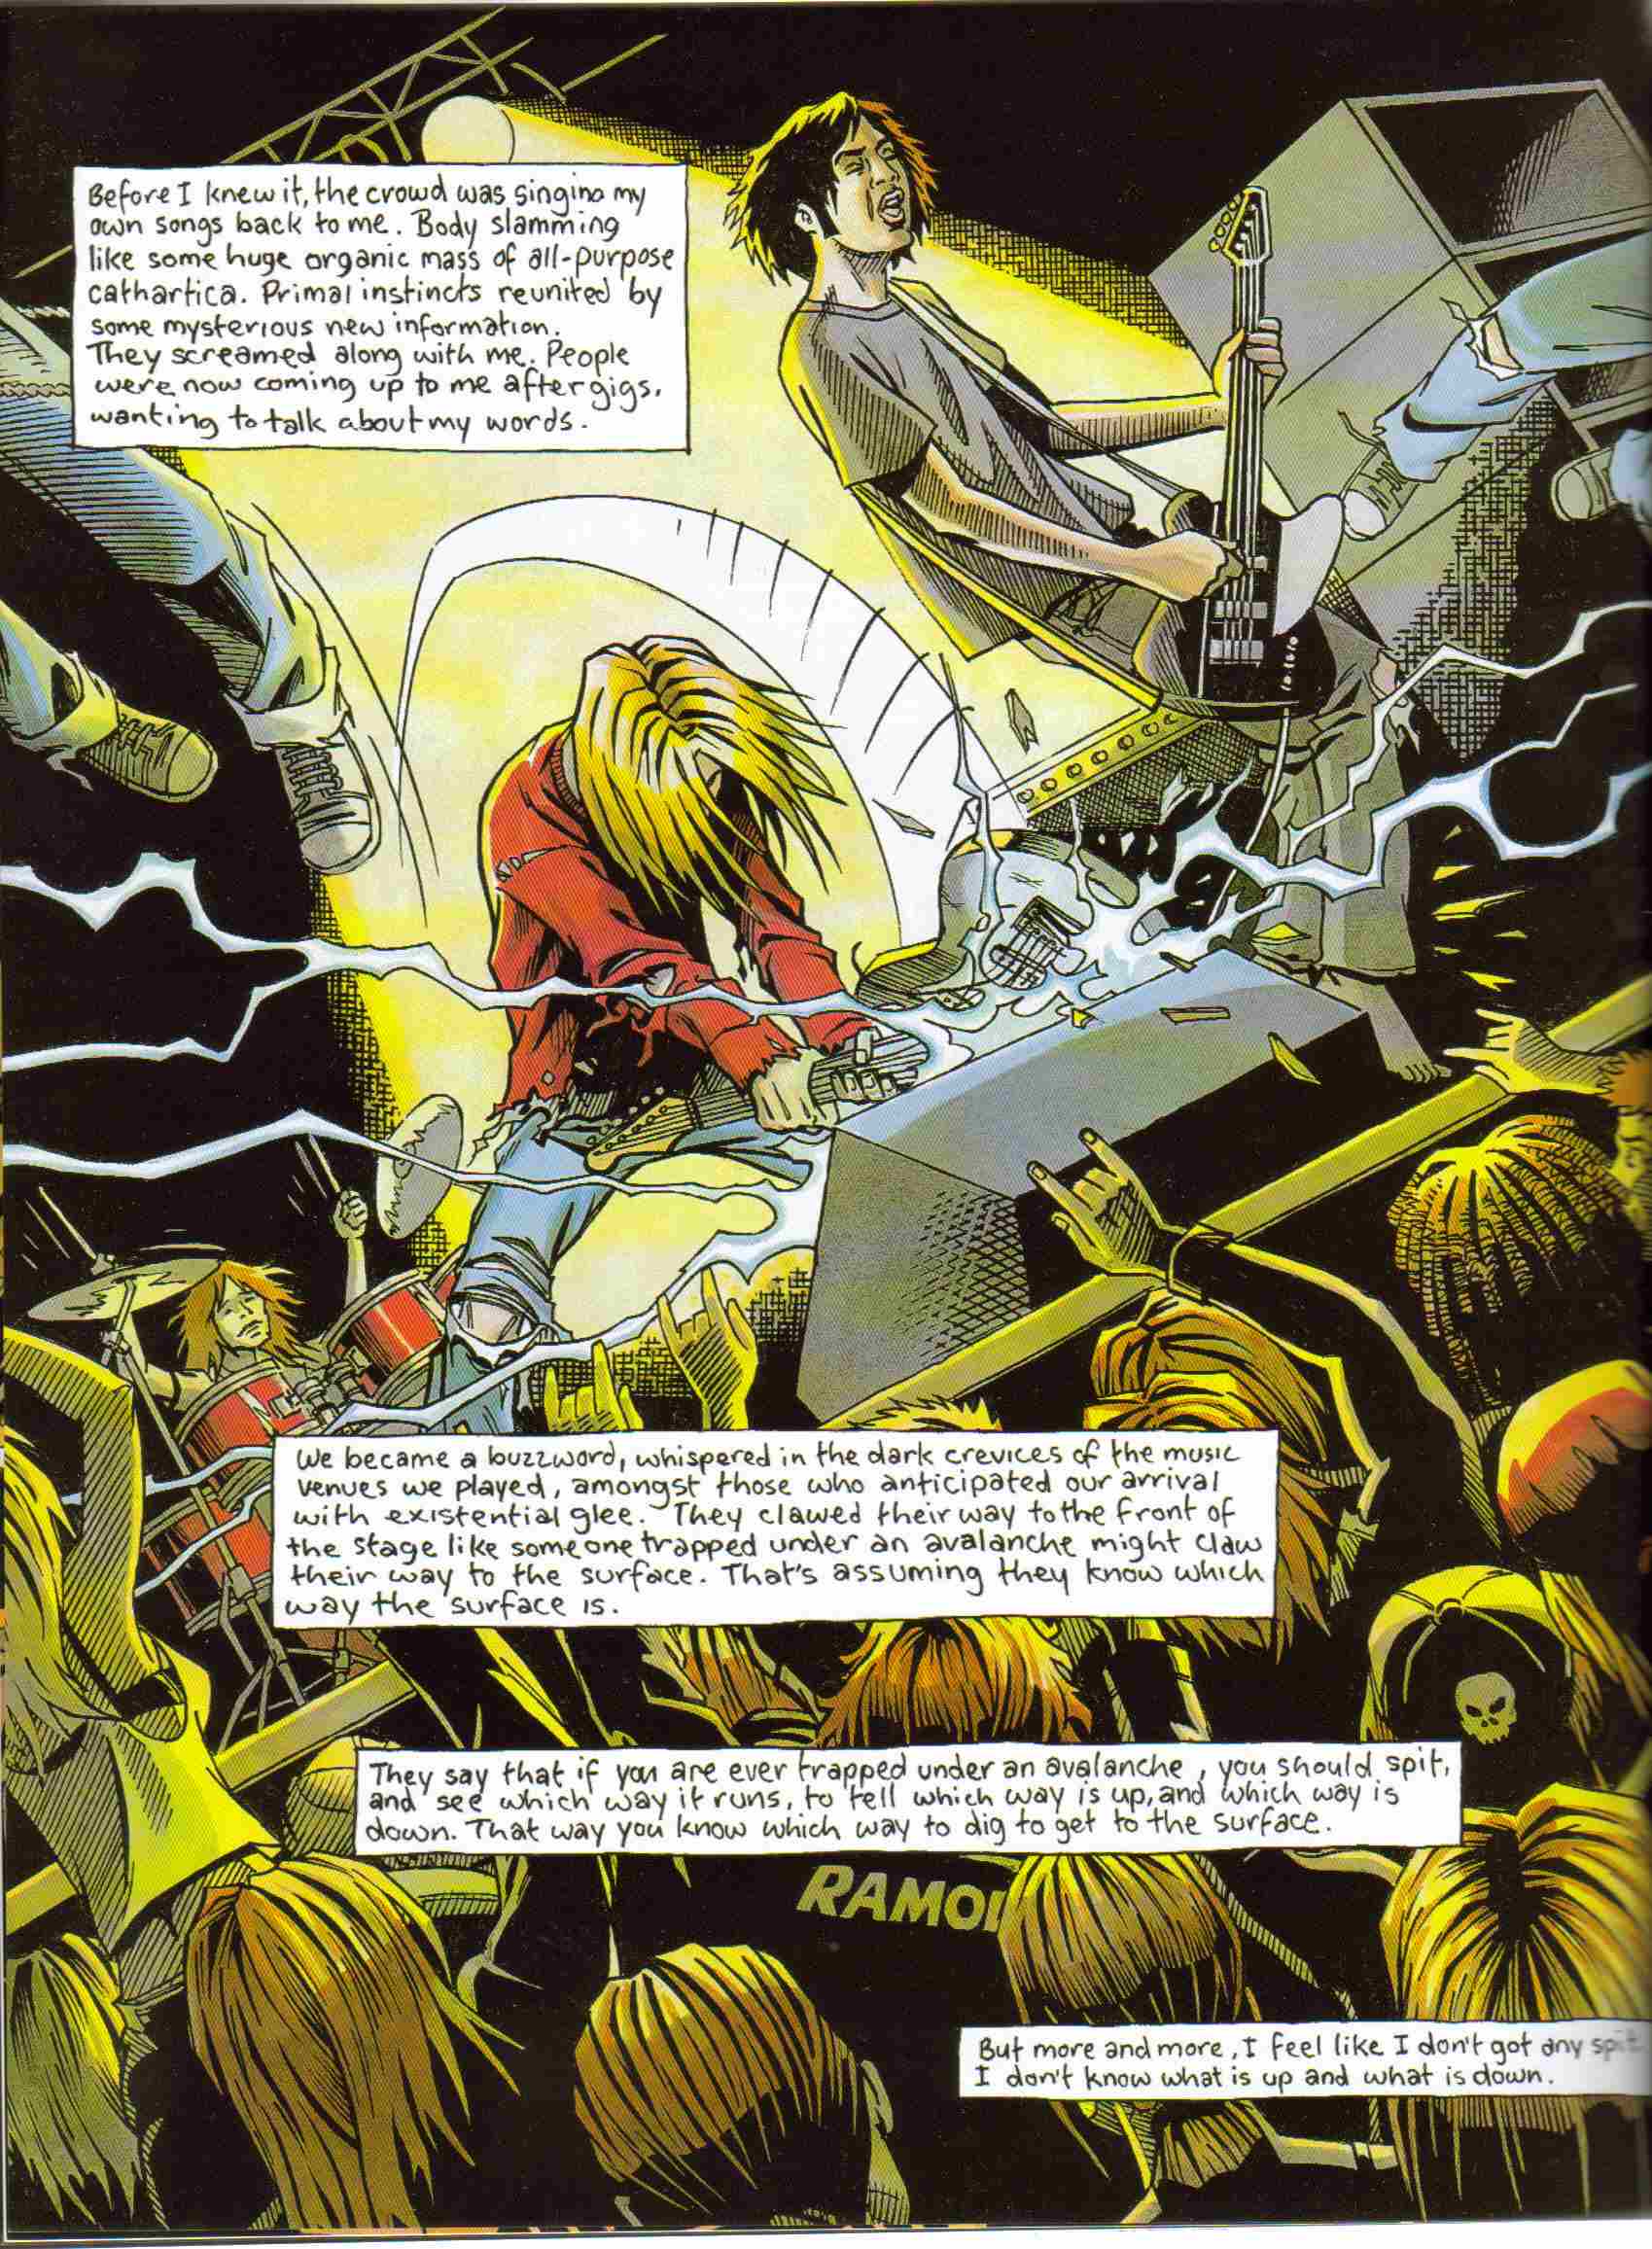 Read online GodSpeed: The Kurt Cobain Graphic comic -  Issue # TPB - 29